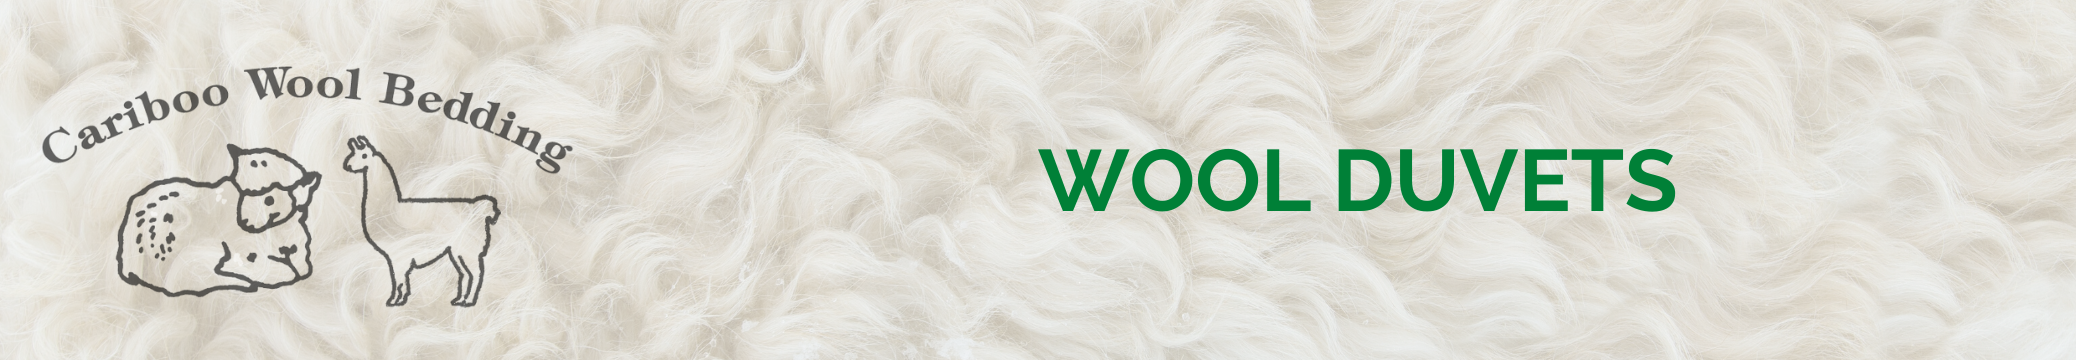 Wool Duvet Store